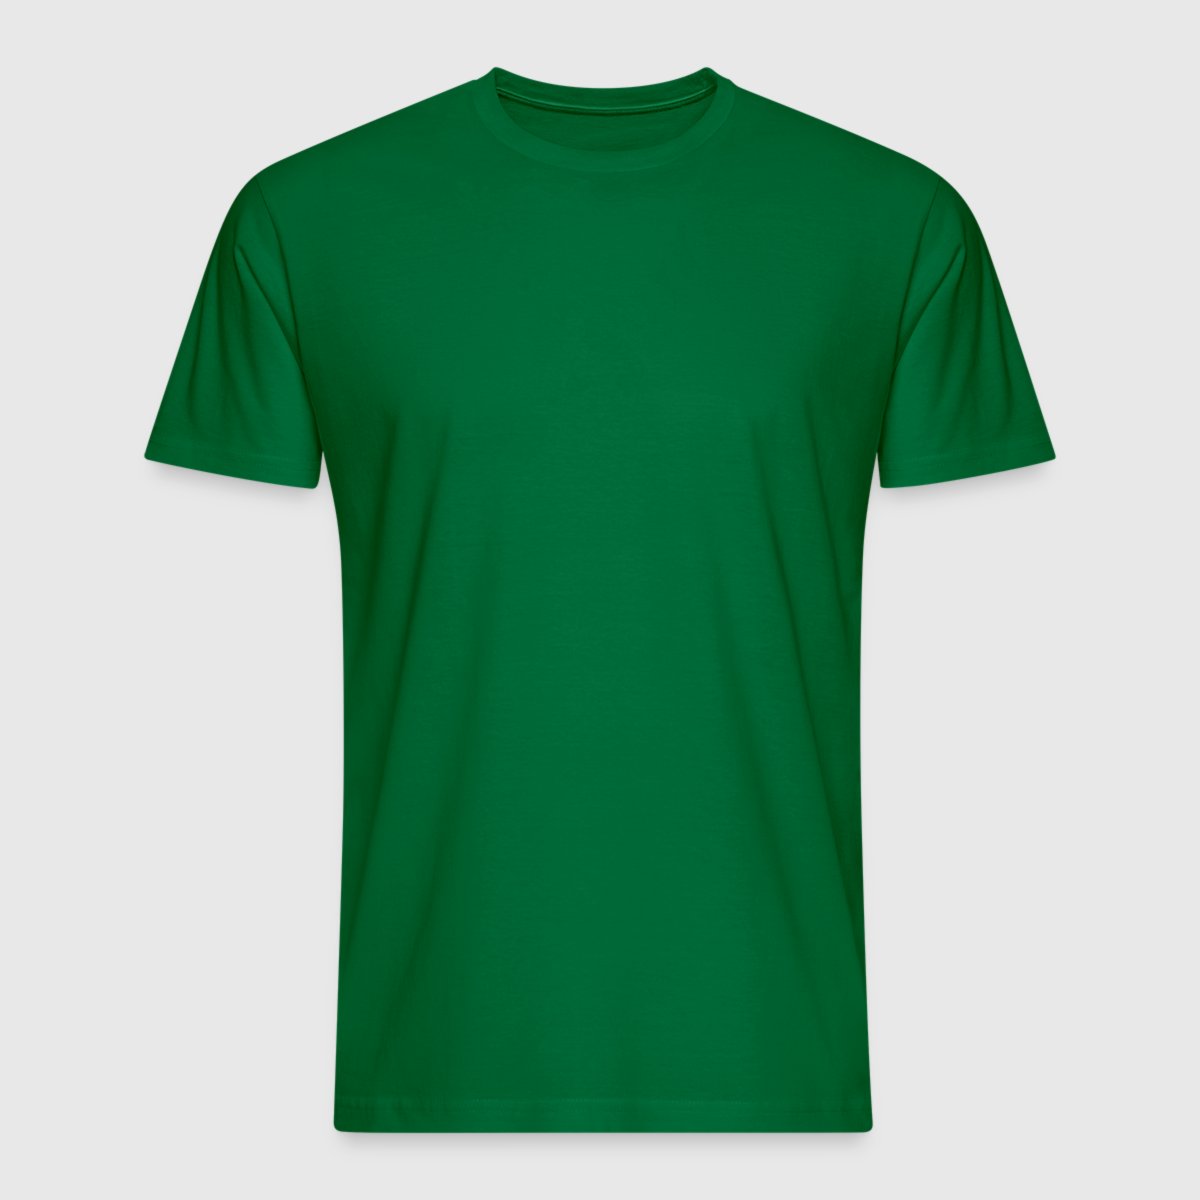 Unisex Organic T-Shirt by Stanley & Stella - Front